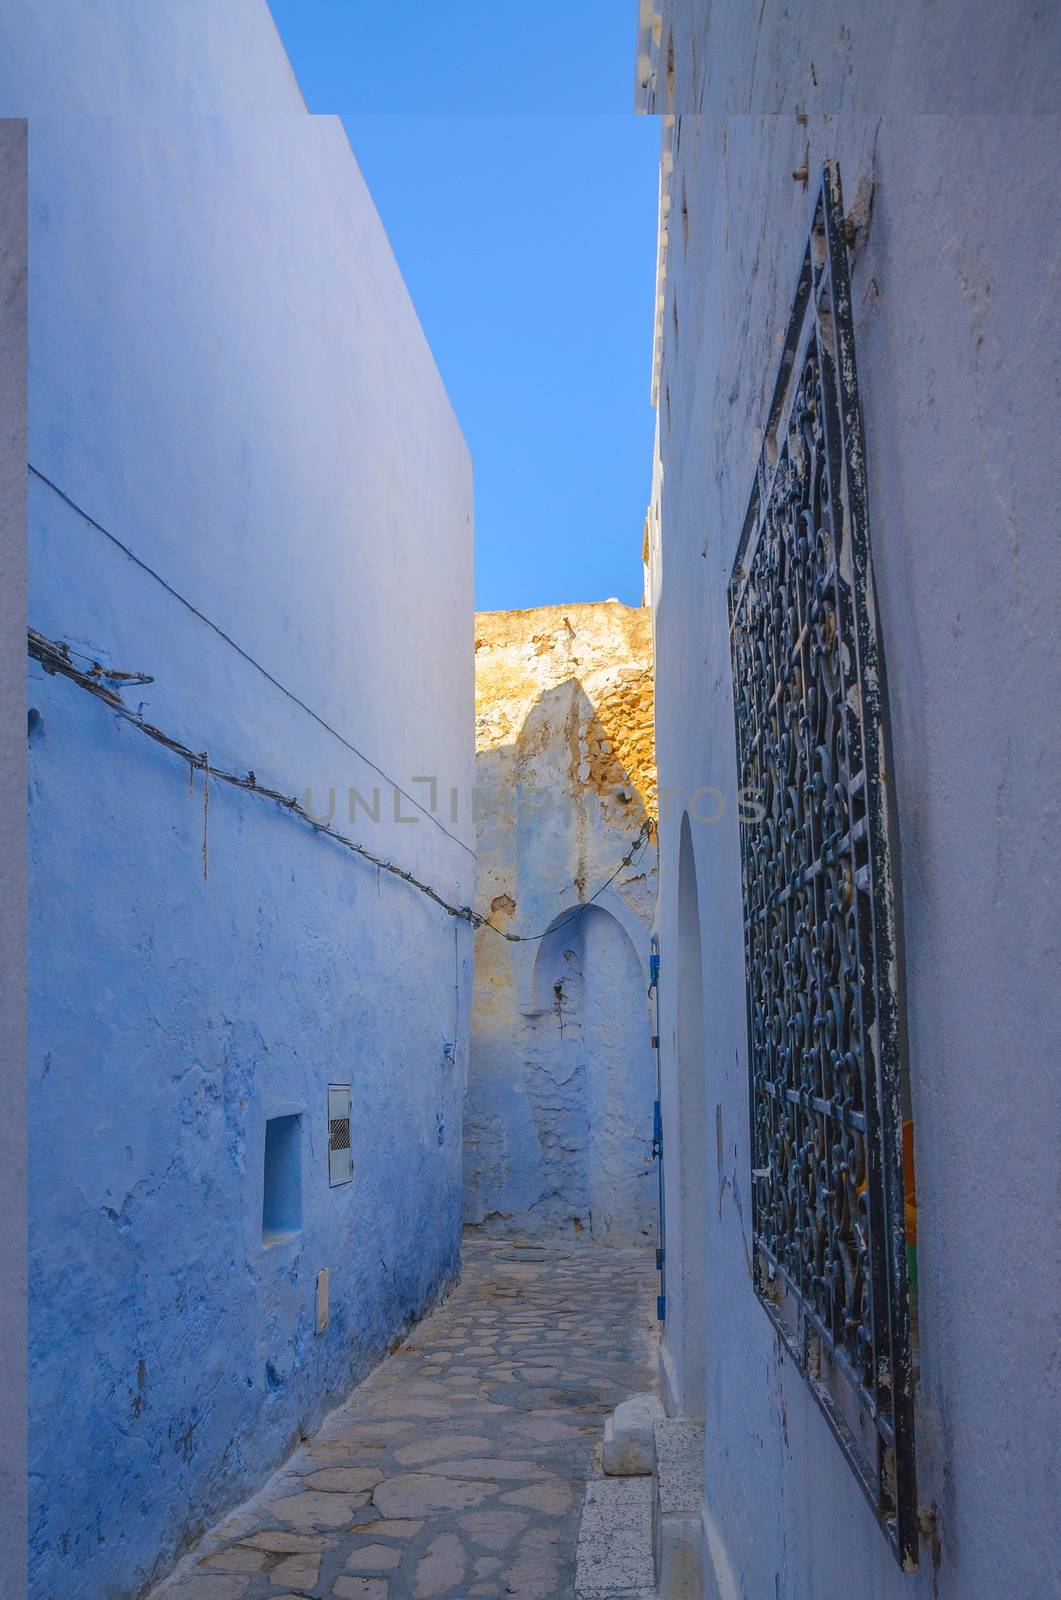 Oriental narrow street with blue houses in Medina, Hammamet Tunisia by Eagle2308